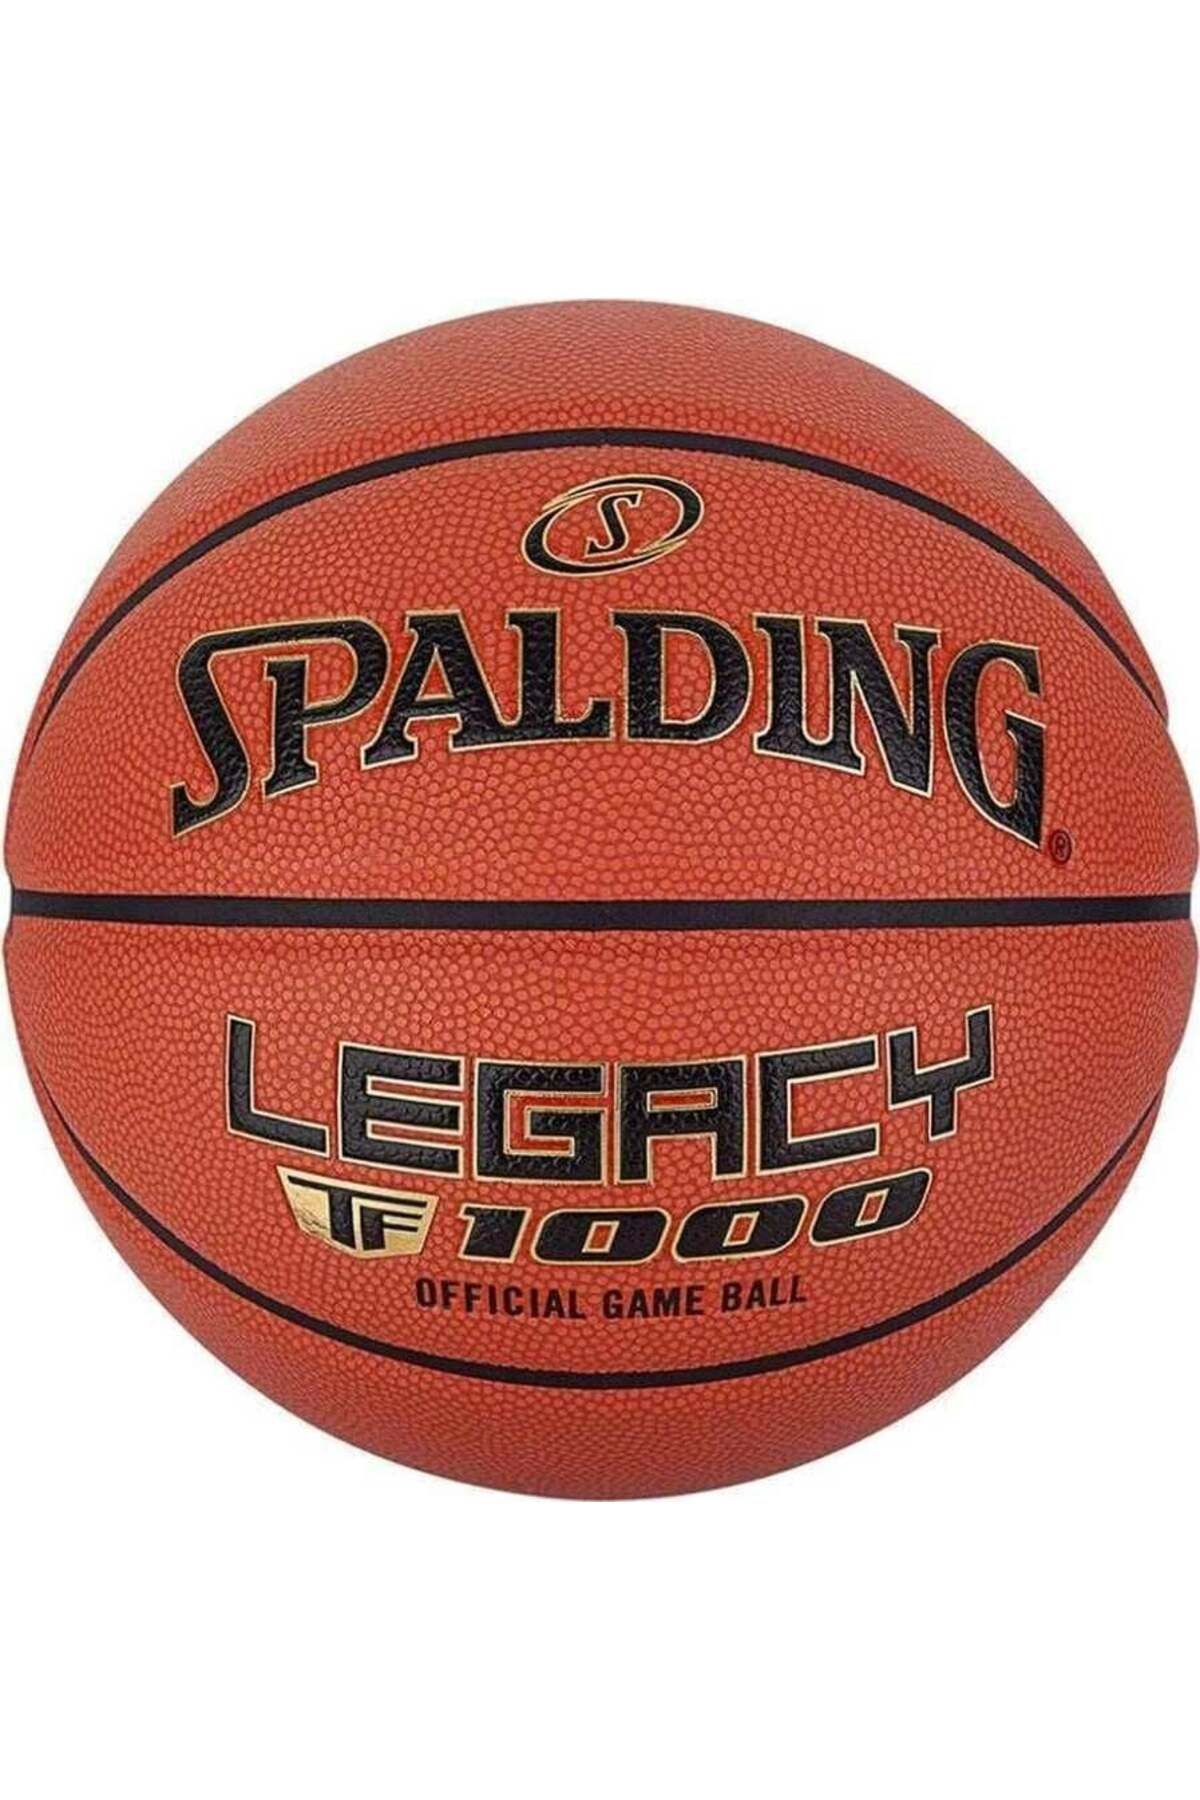 Spalding Tf-1000 Legacy Fıba No6 Basketbol Topu 76964z